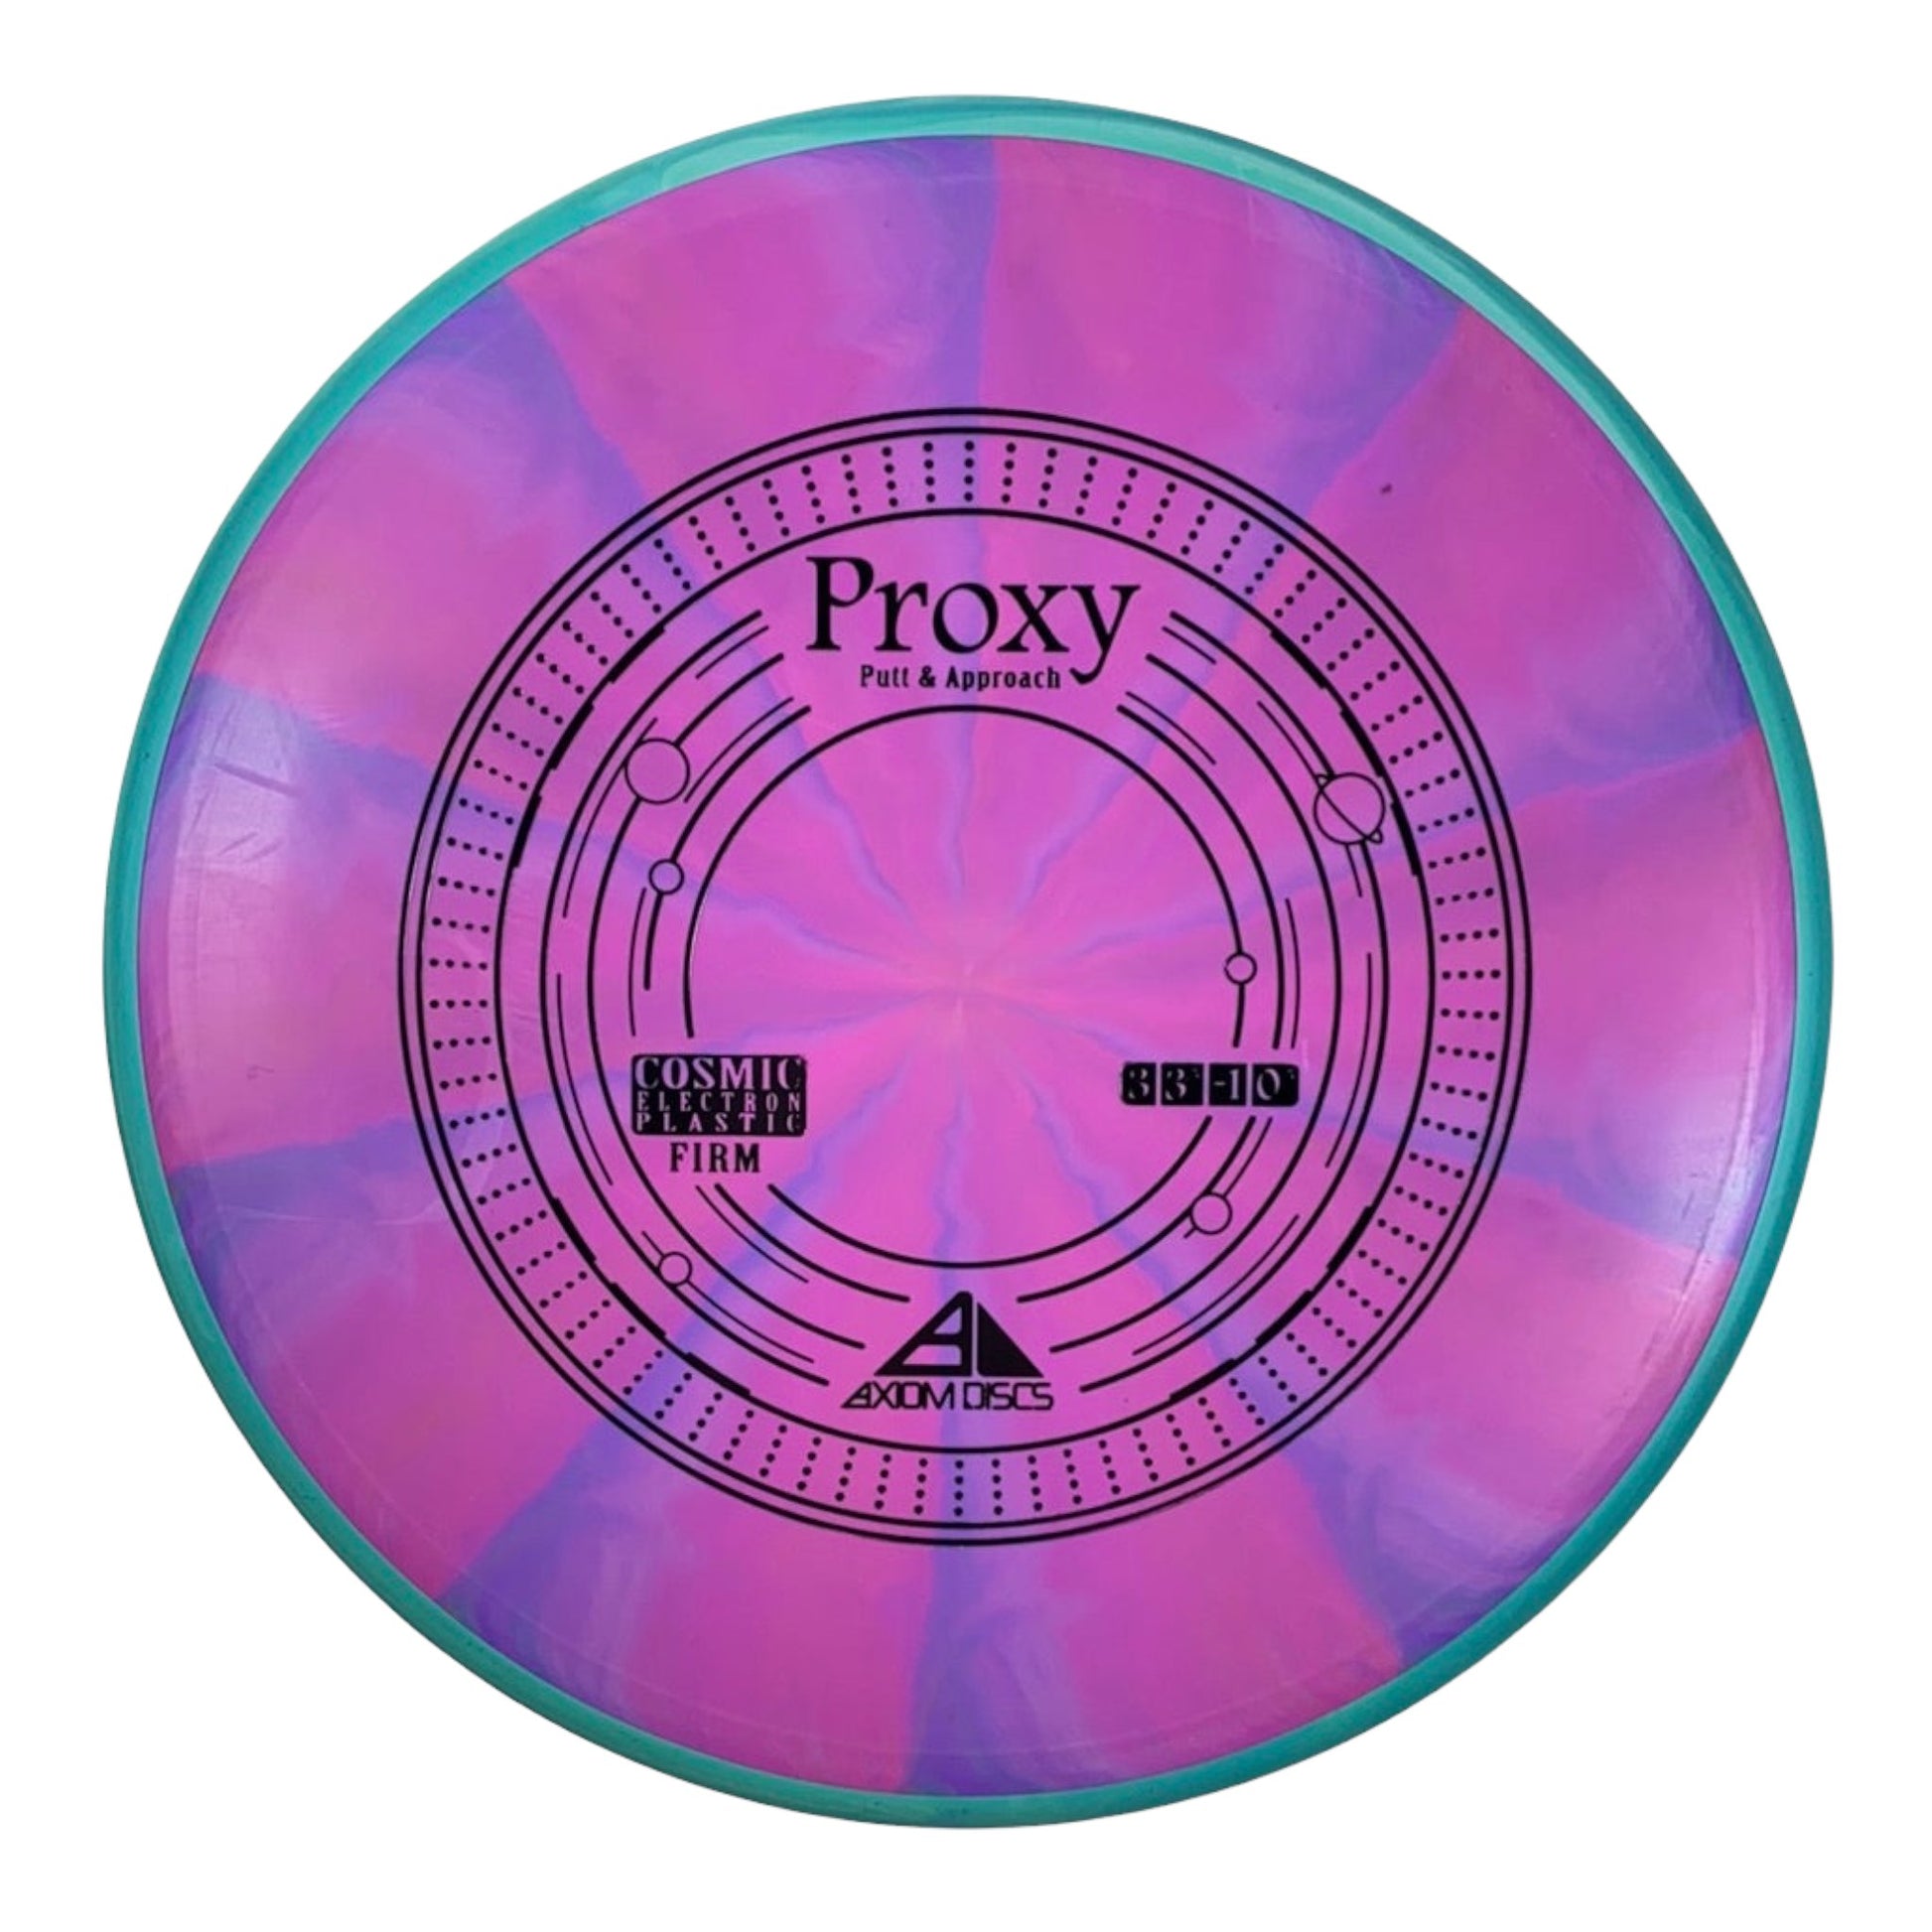 Axiom Discs Proxy | Cosmic Electron Firm | Purple/Green 168g